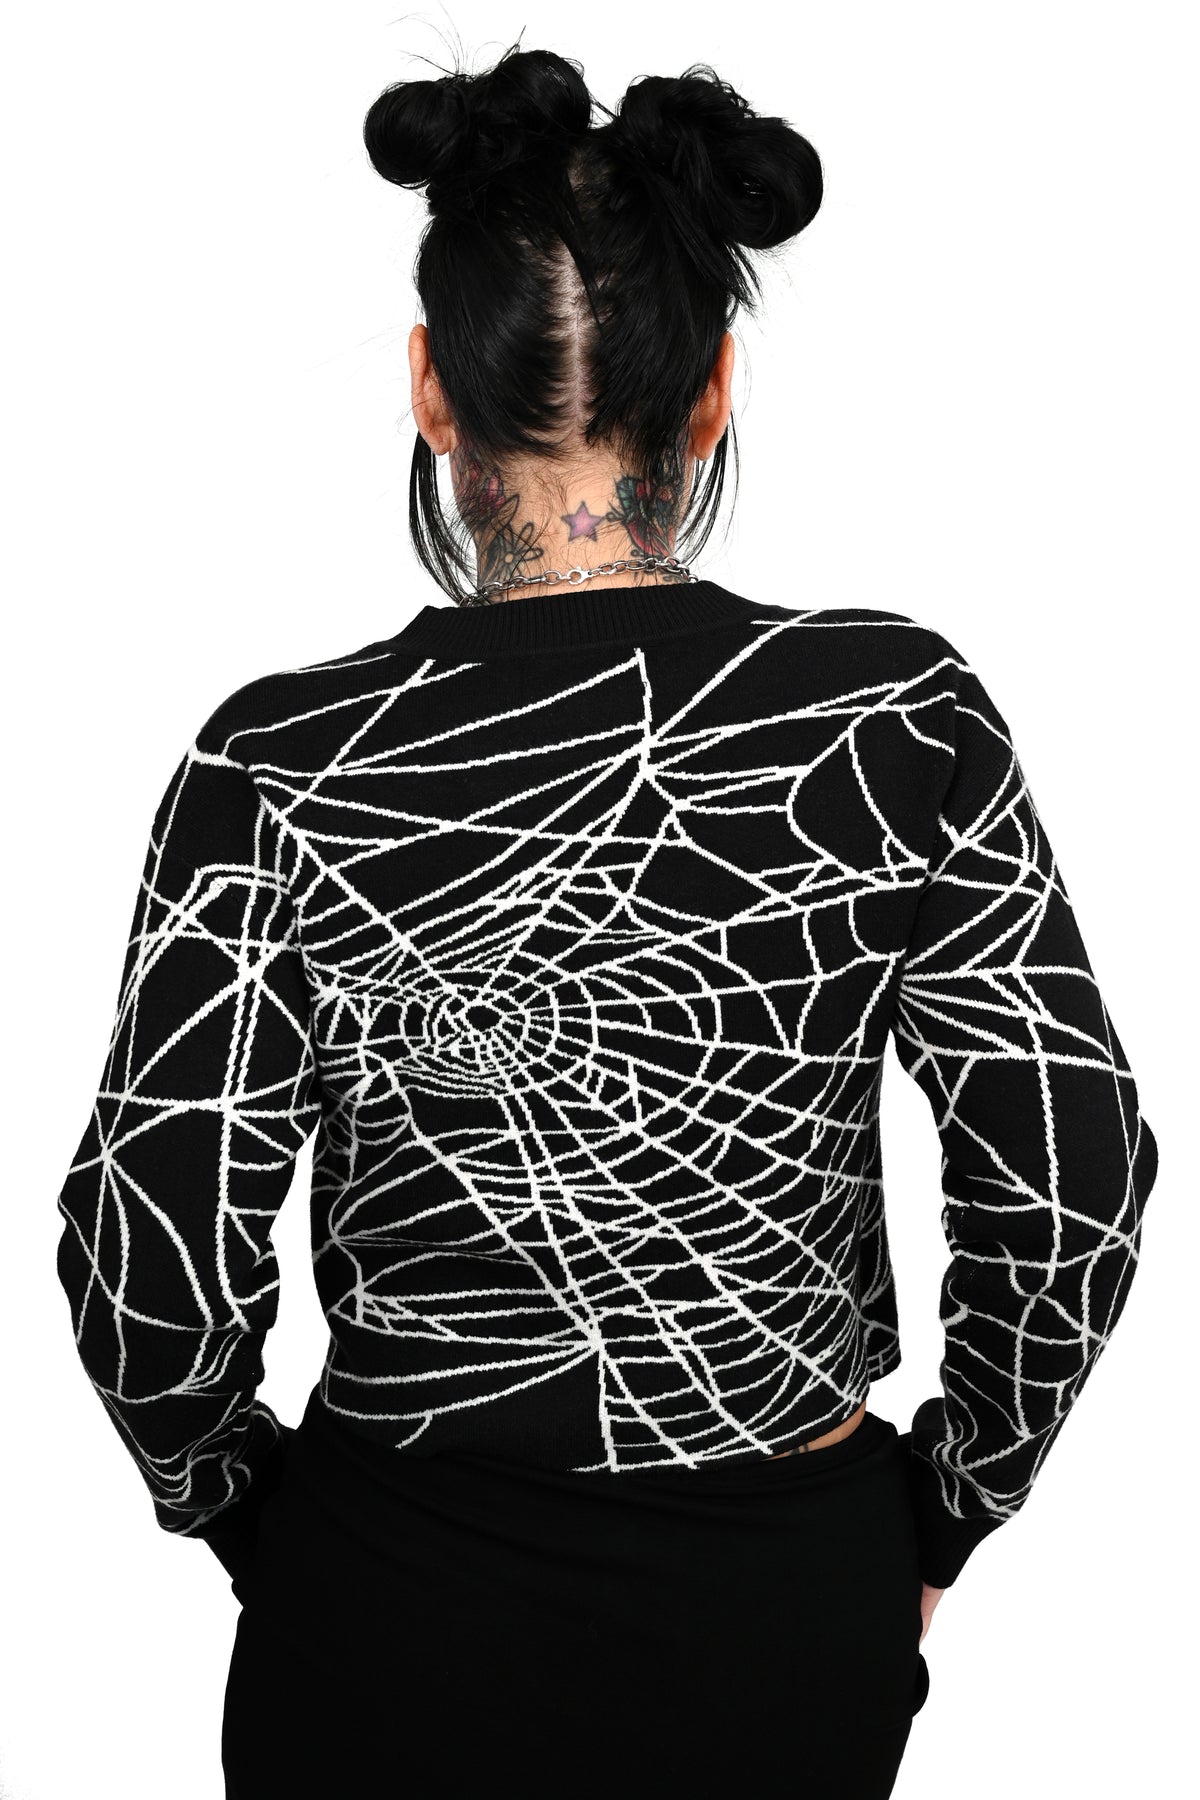 Cobweb Crop Sweater - 4XL left!